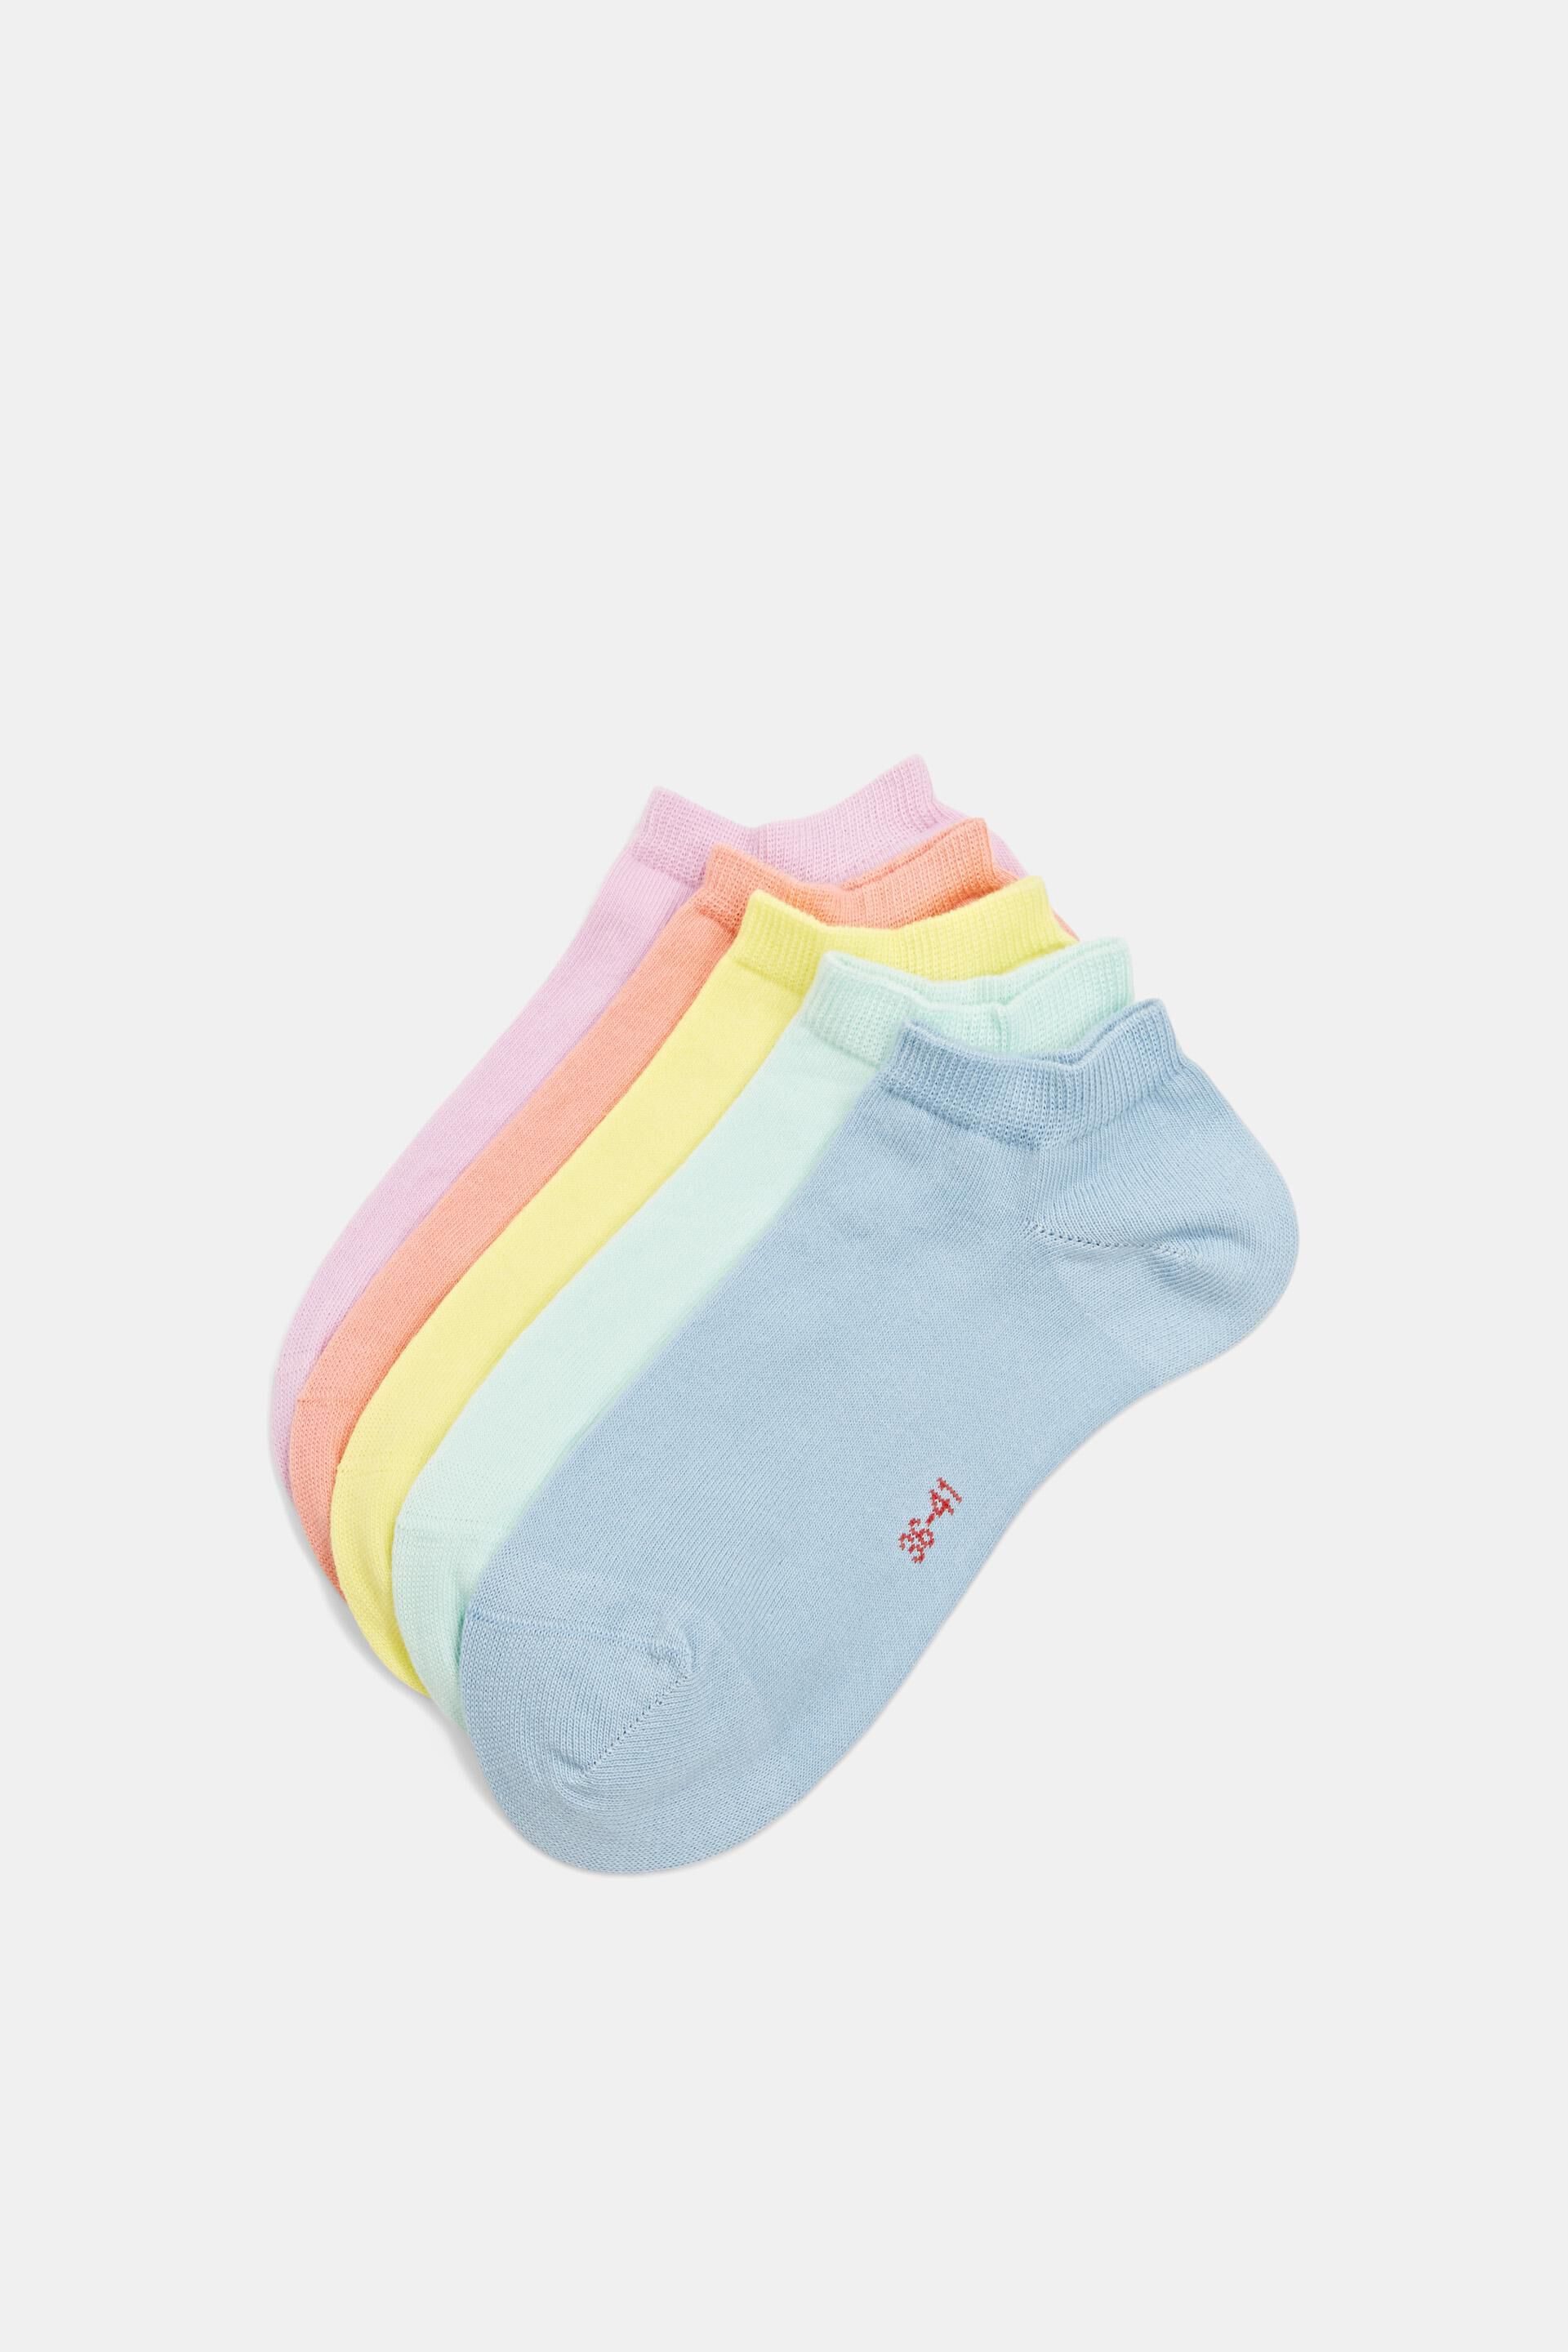 Esprit Five-pack of socks, blended cotton organic sneaker